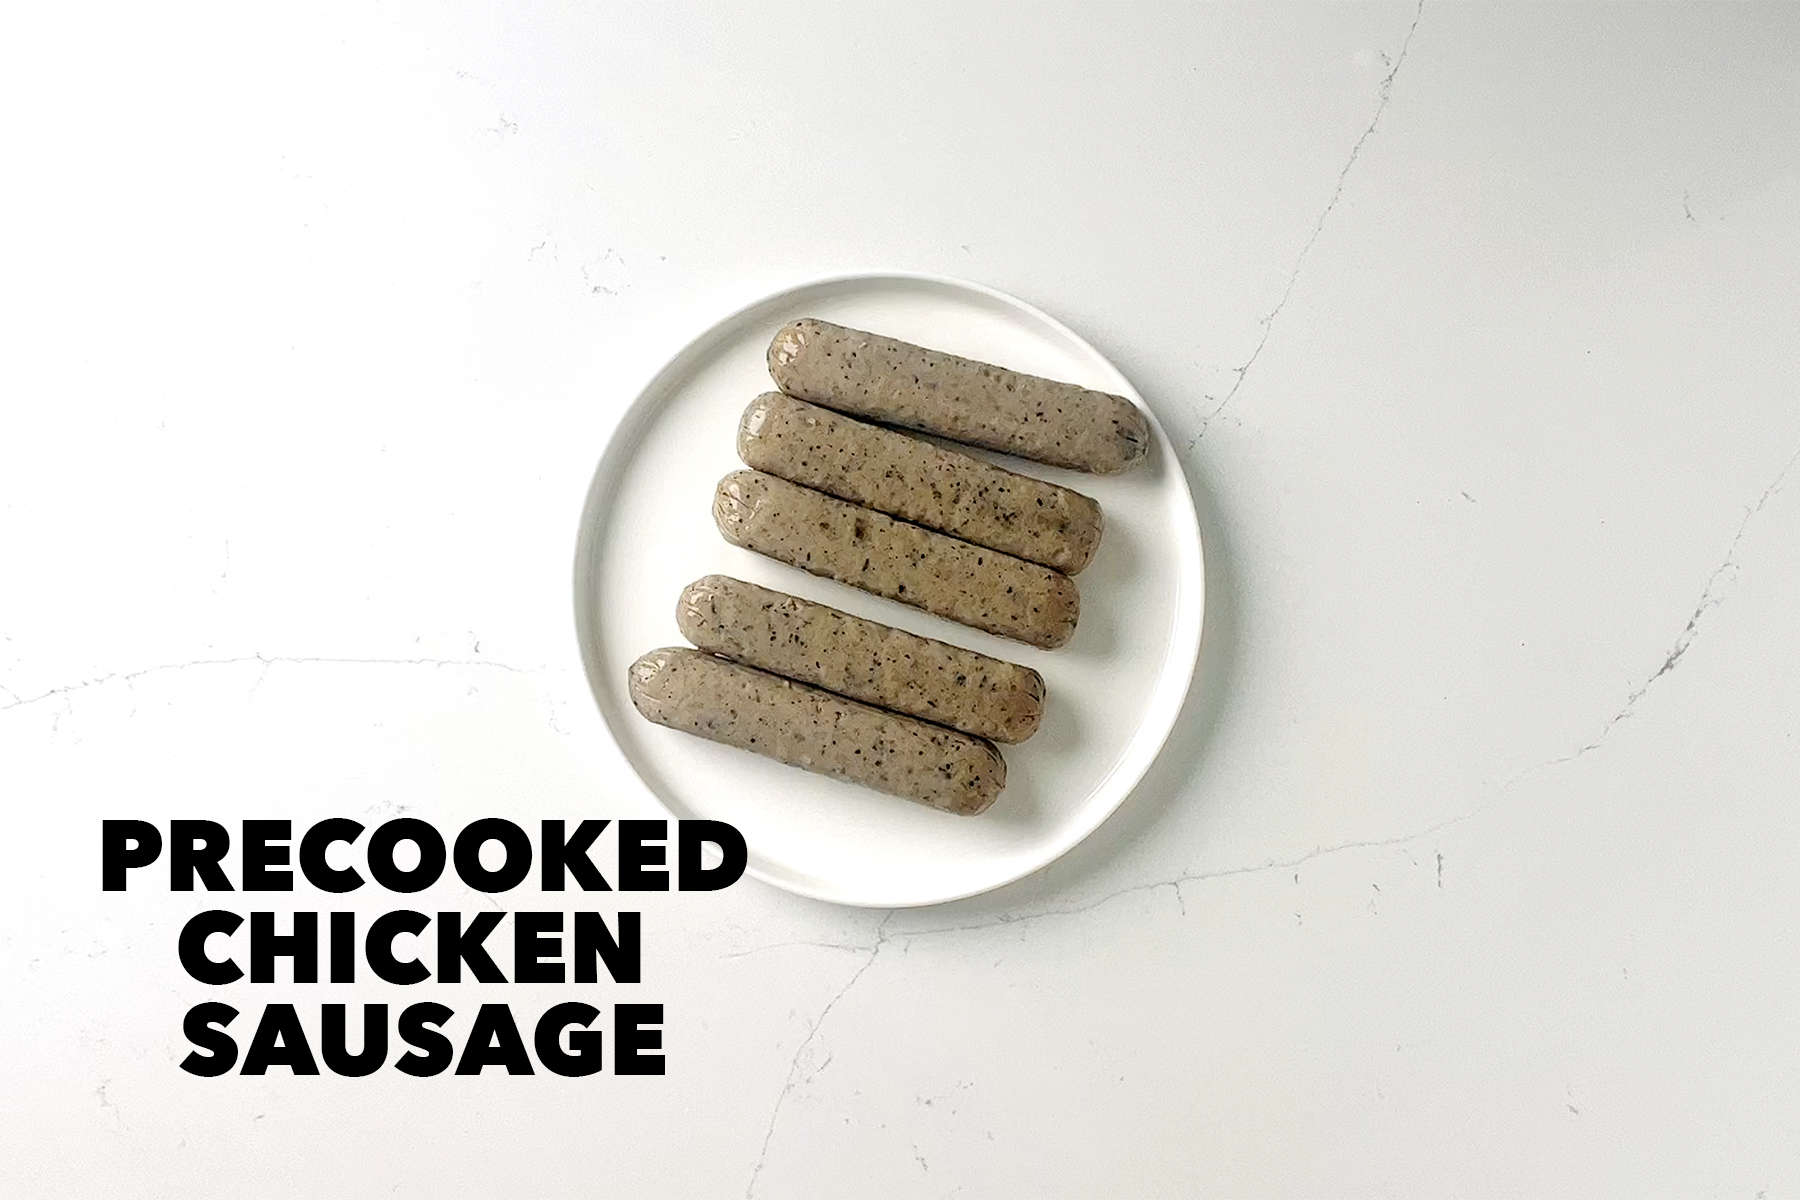 chicken sausage on plate on white background